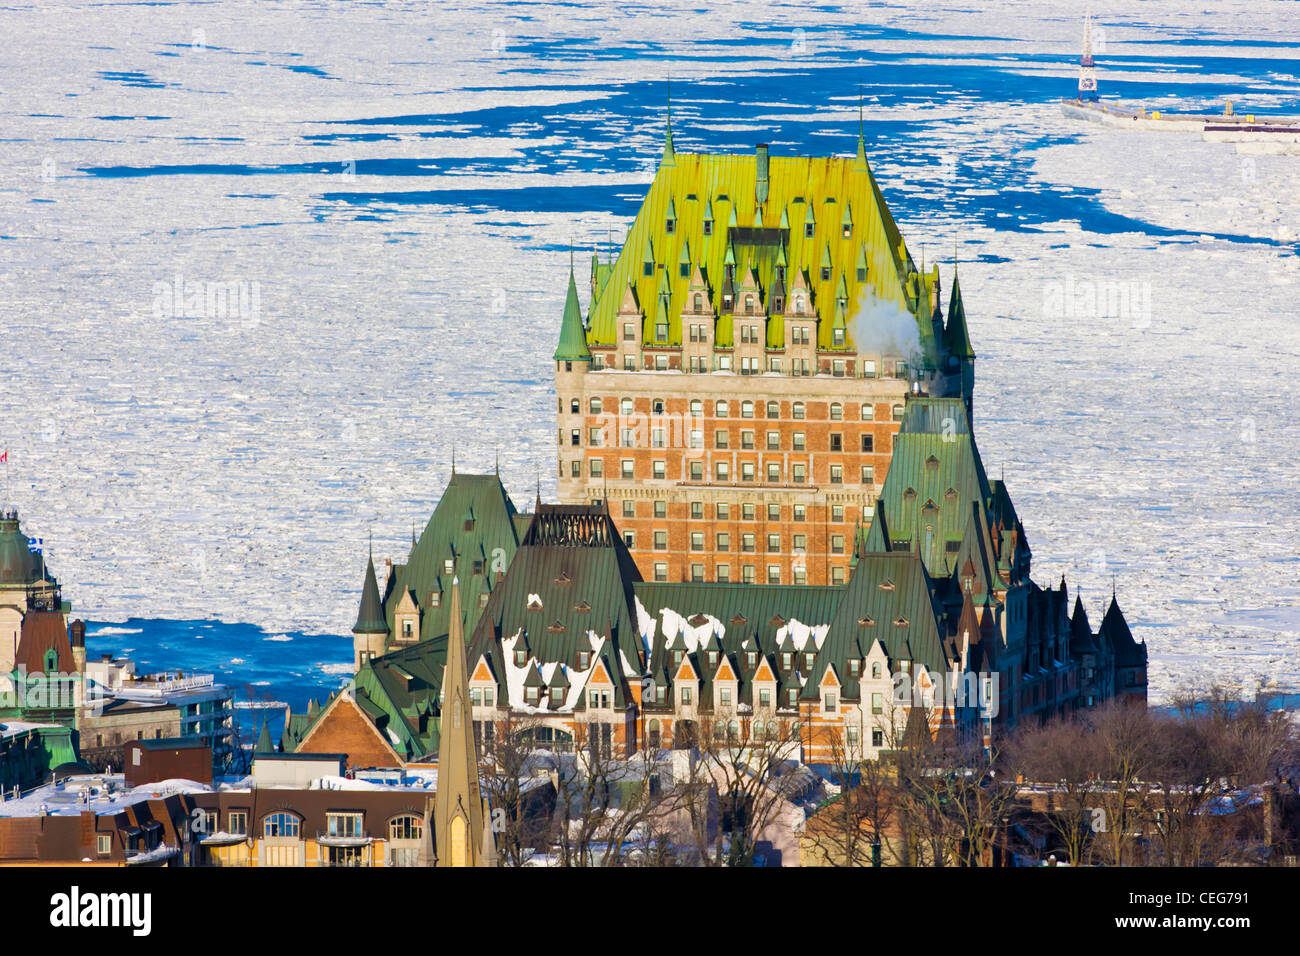 Fairmont Le Chateau Frontenac by Saint Lawrence River, Quebec City (UNESCO World Heritage site), Canada Stock Photo